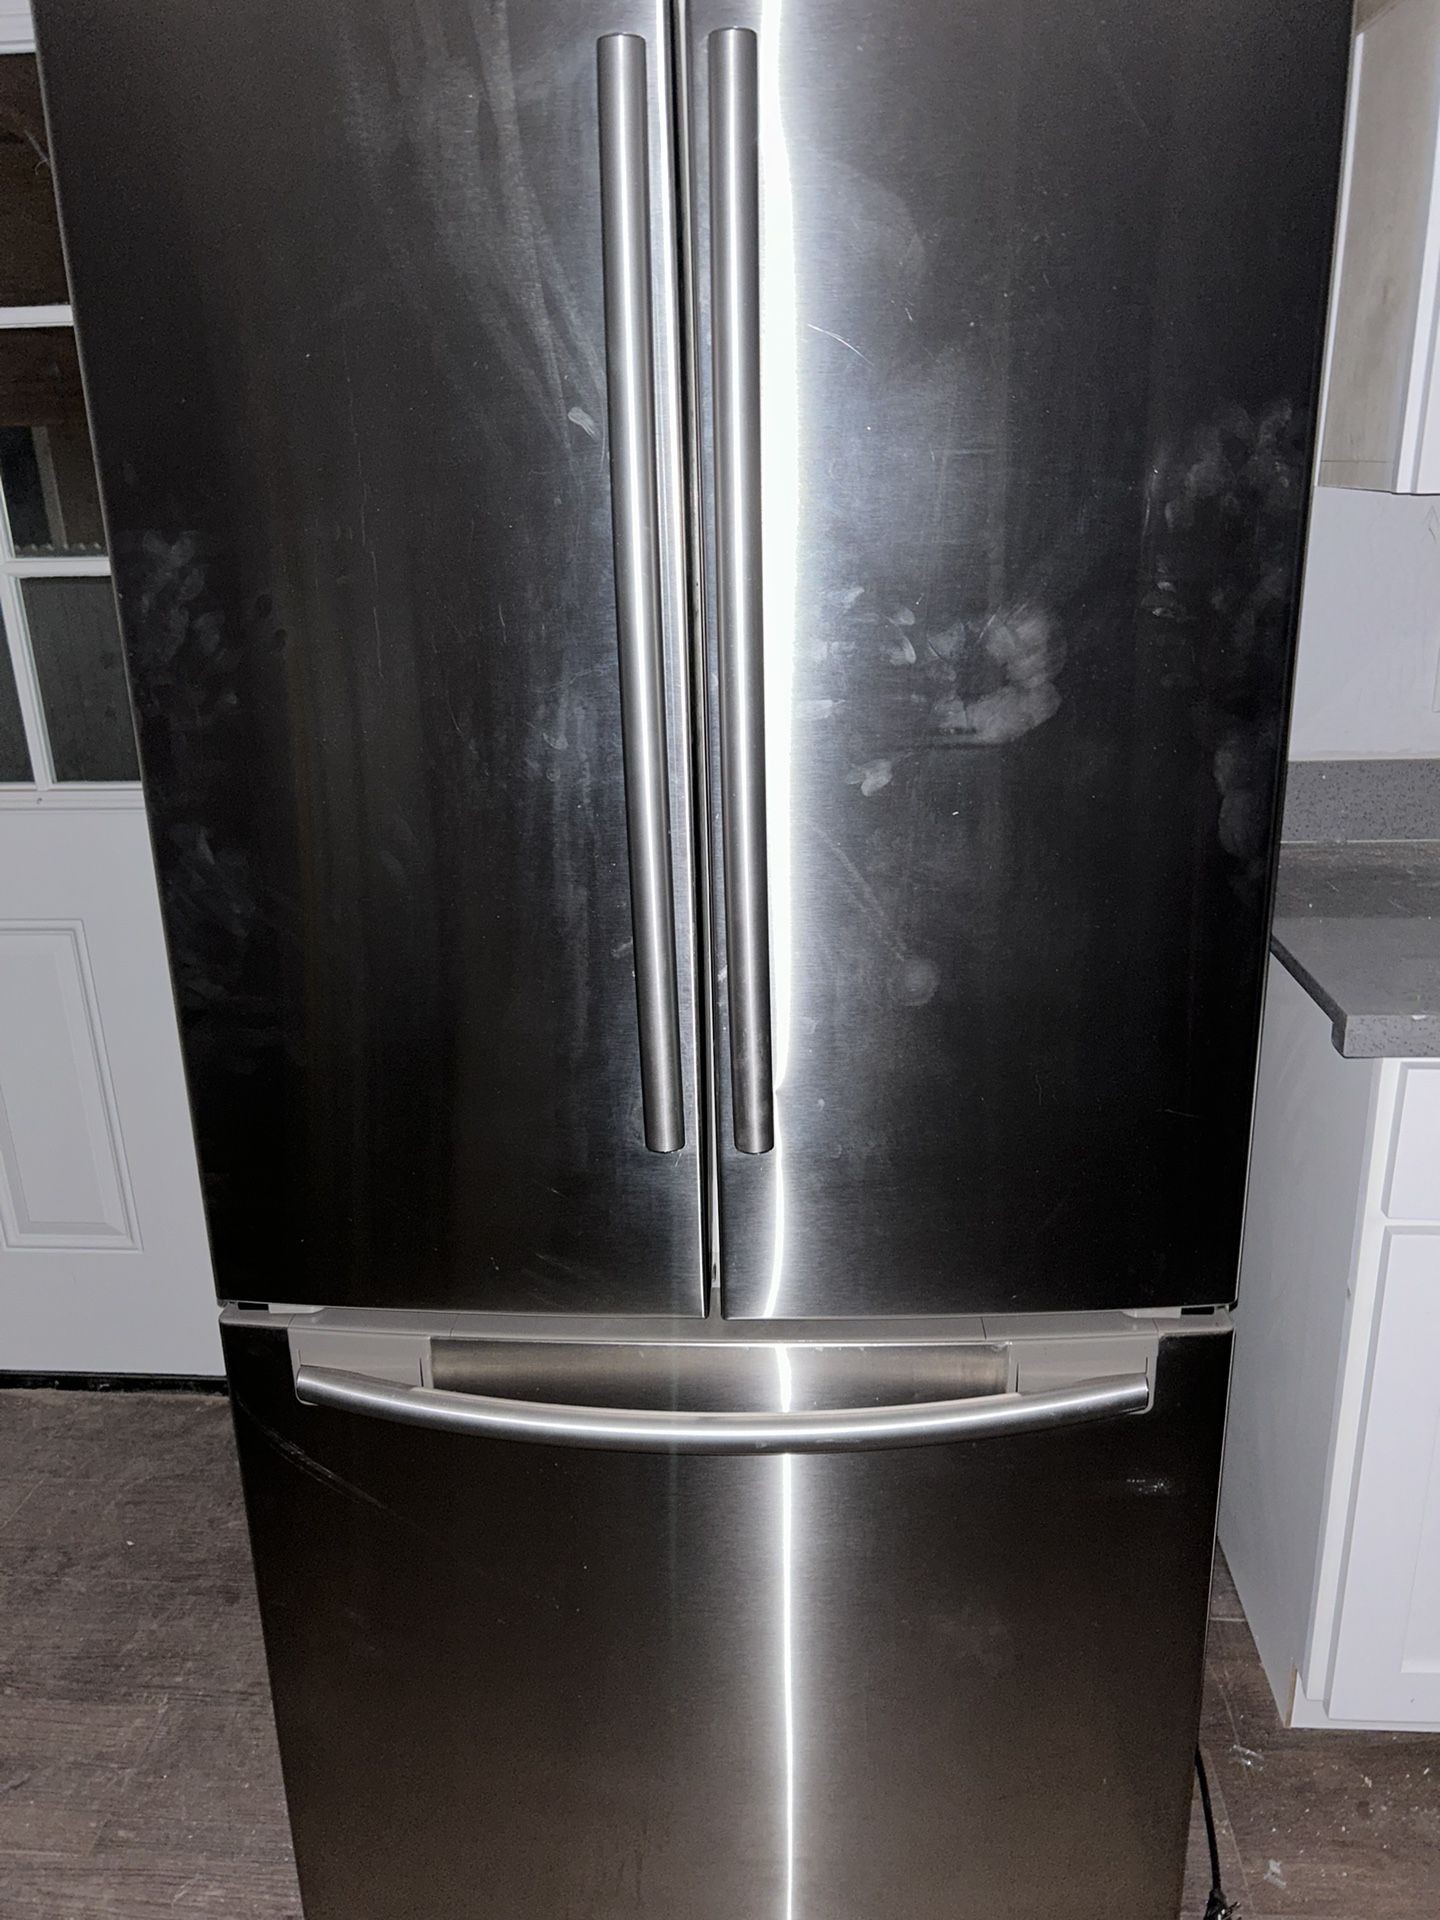 Samsung Stainless Steel French Door Refrigerator 